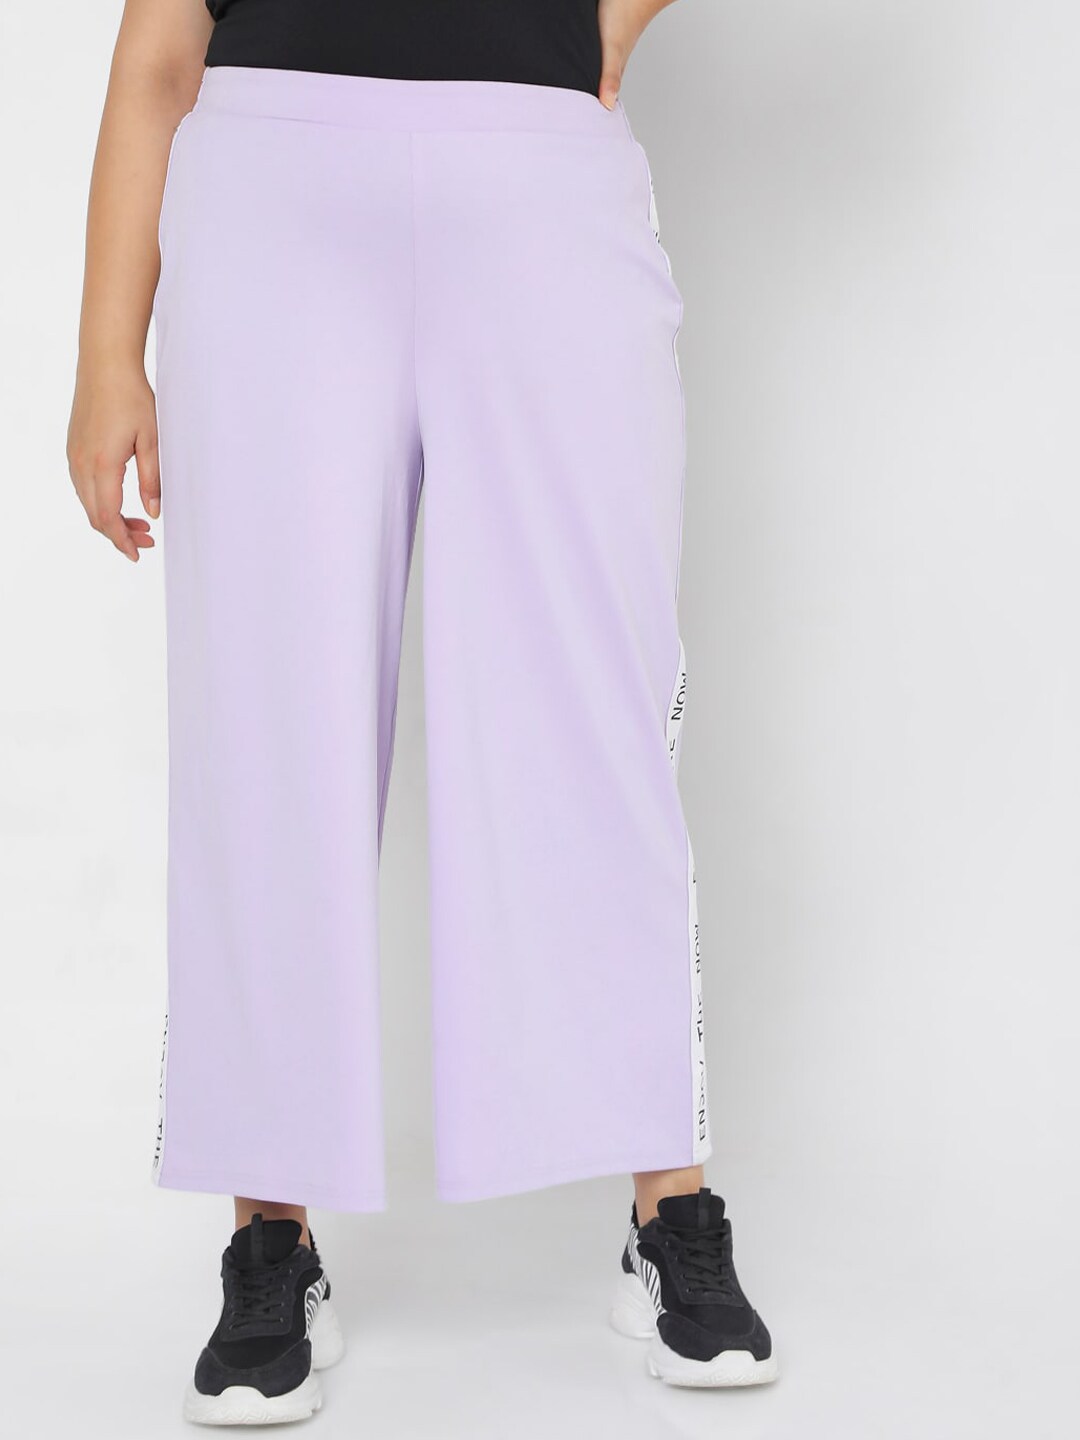 Vero Moda Women Purple Loose Fit Parallel Trousers Price in India